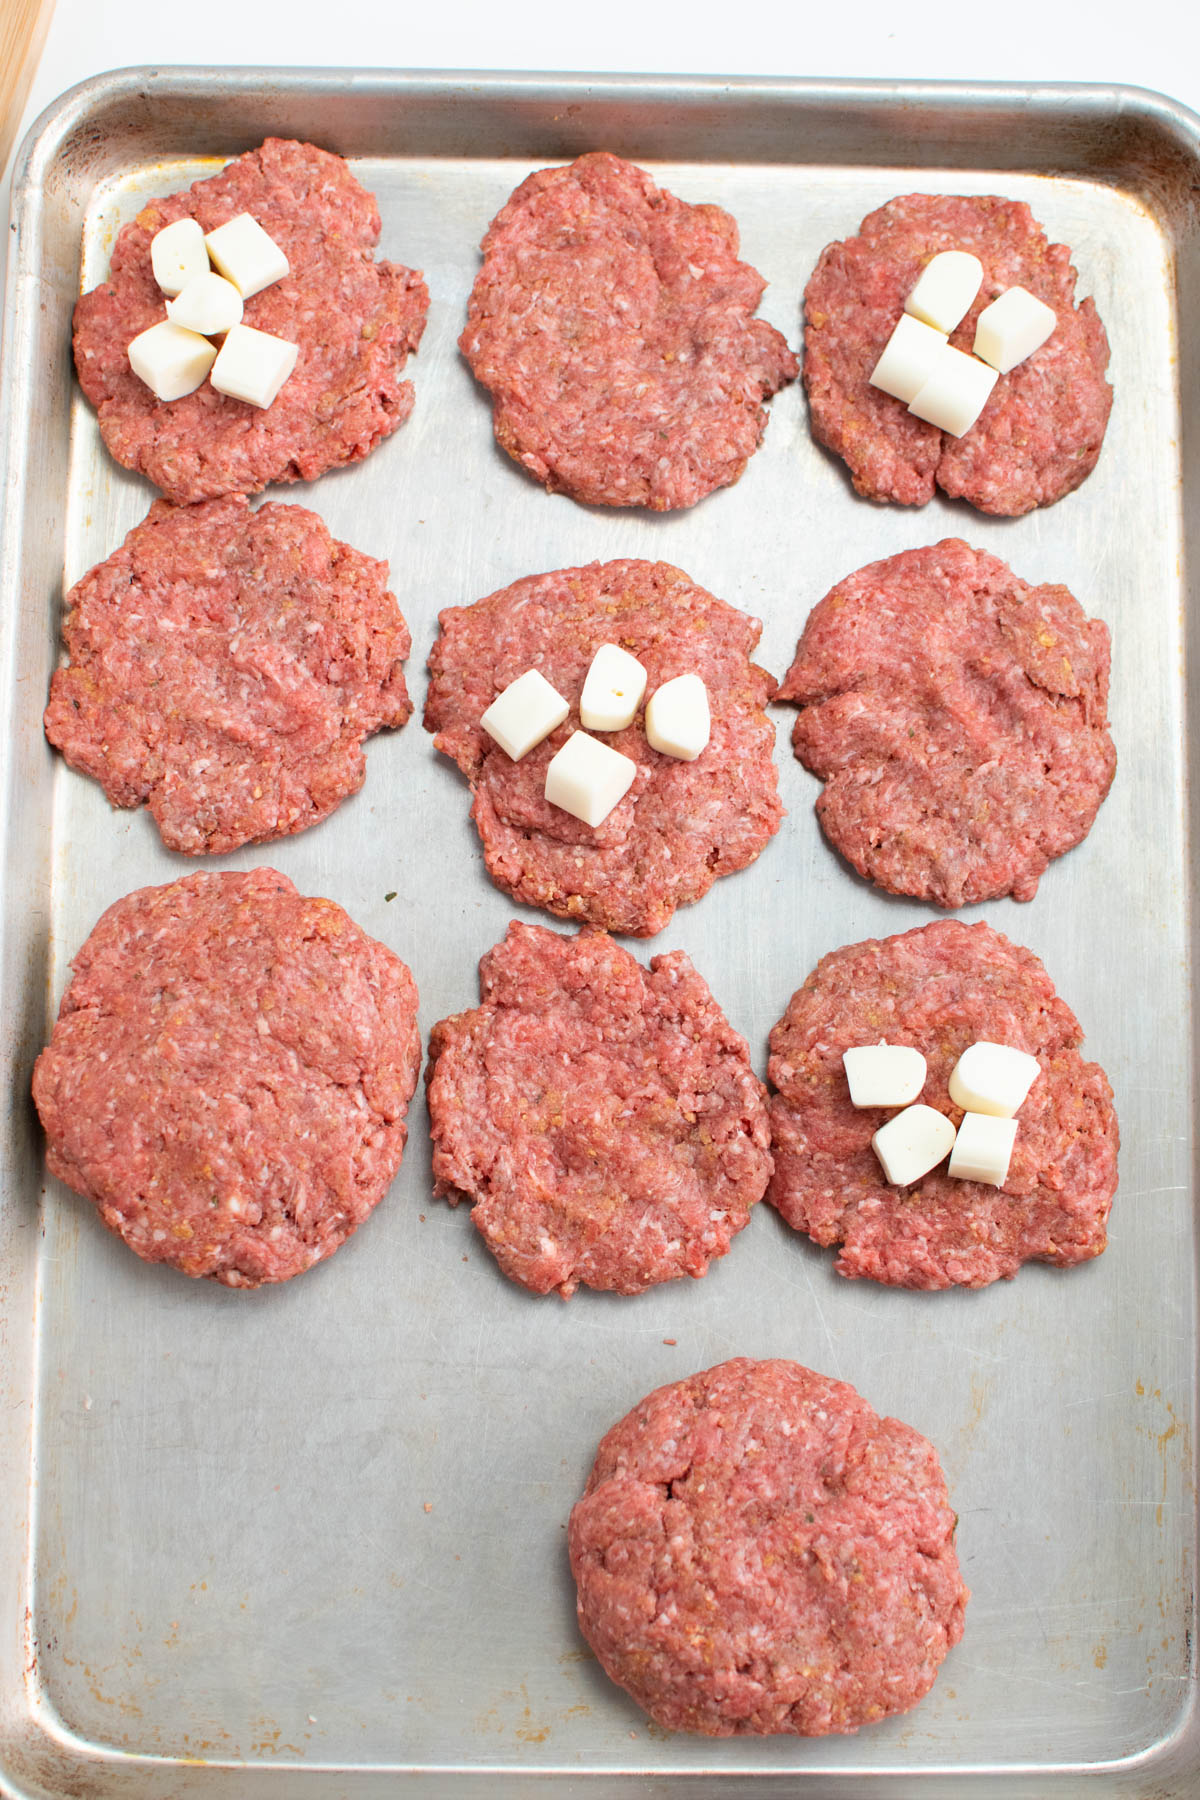 Mozzarella cubes on some raw hamburger patties all on sheet pan.